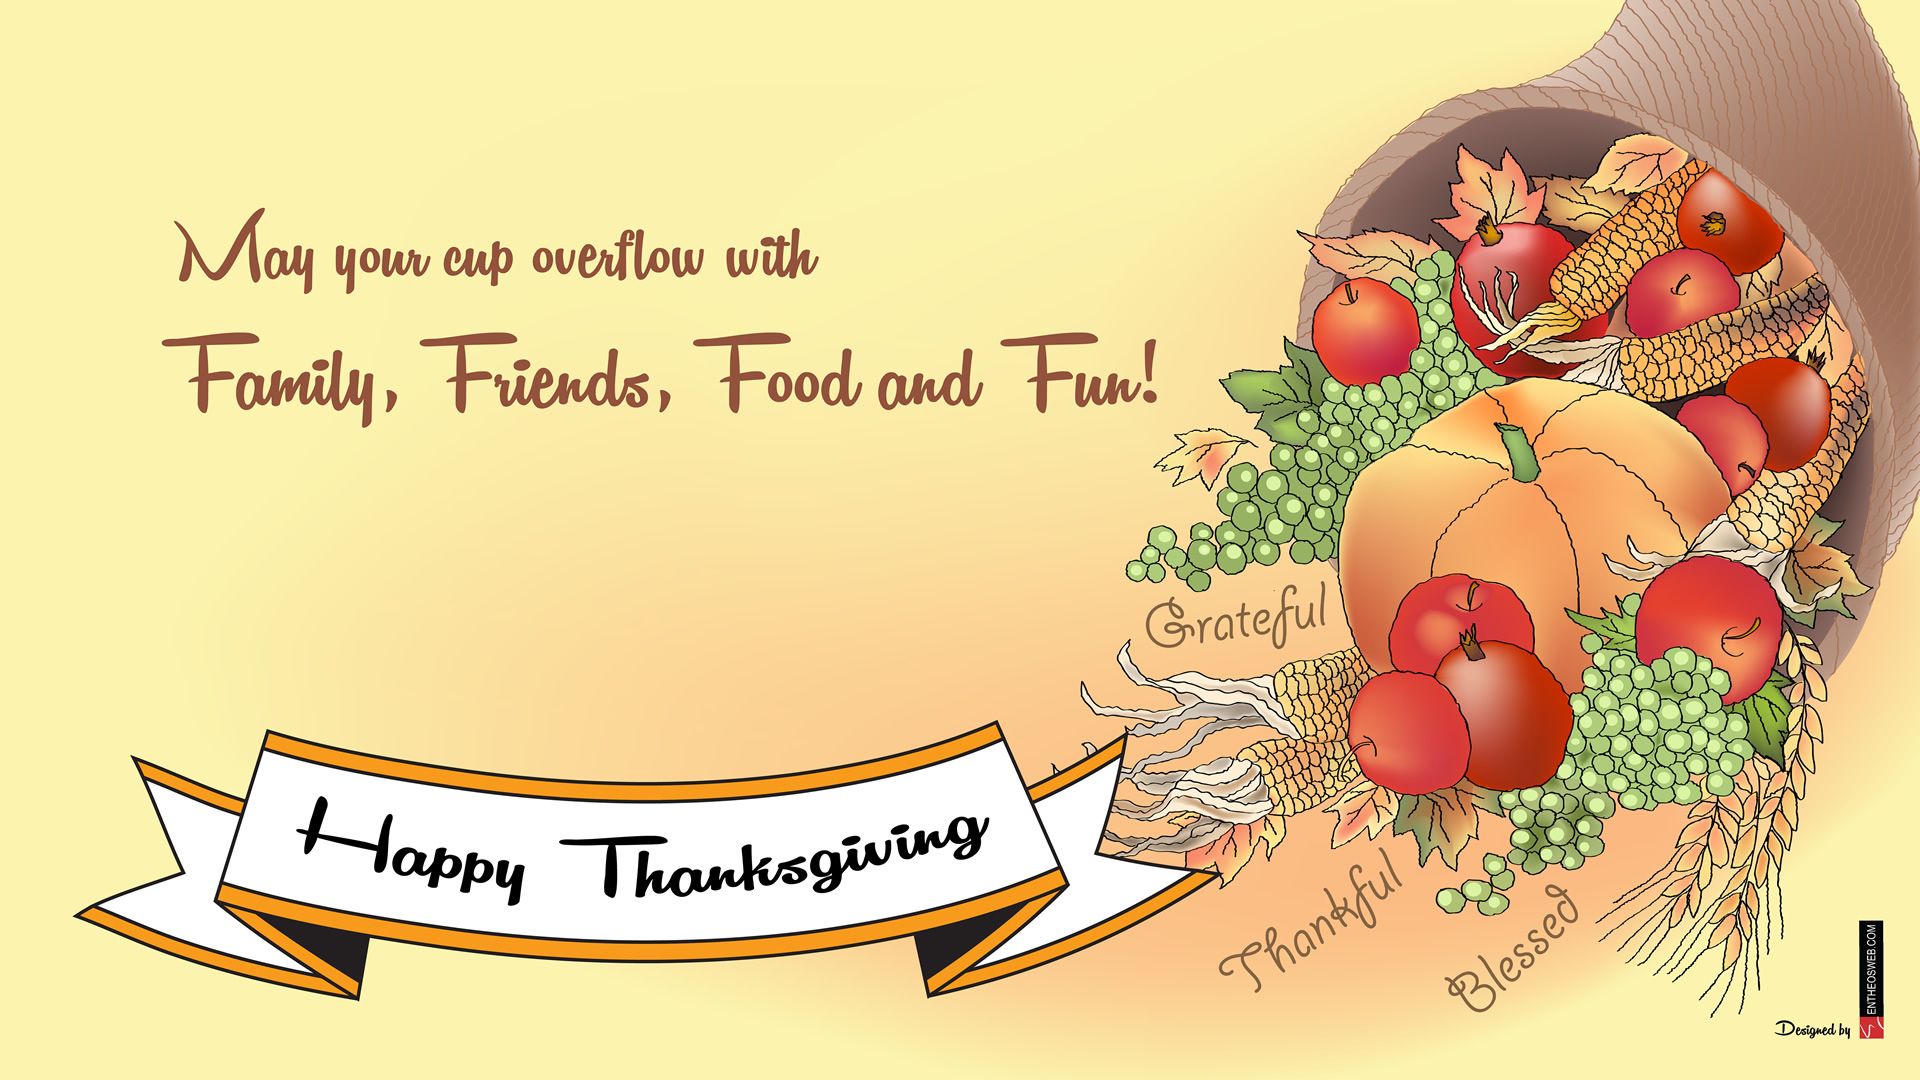 Beautiful Thanksgiving Desktop Wallpaper Background